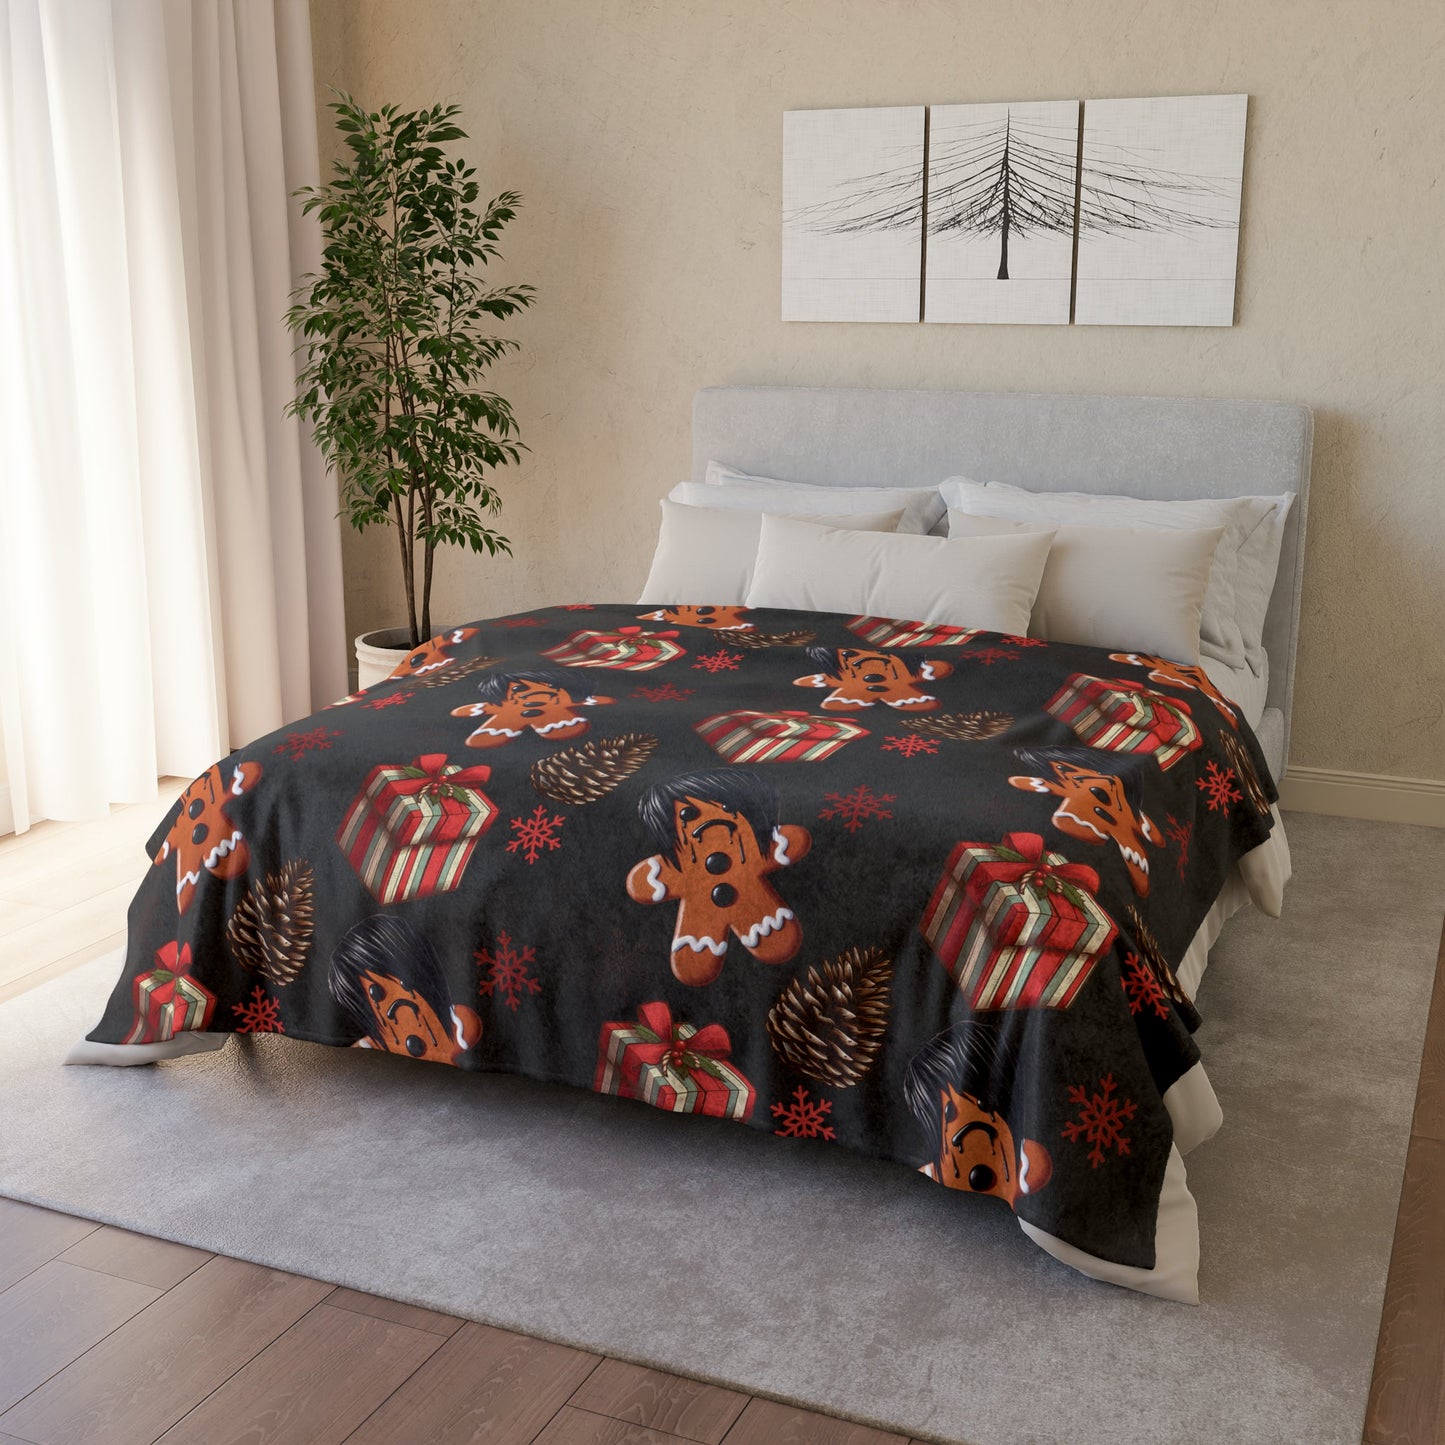 Emo Gingerbread Man BlanketHome DecorVTZdesigns60" × 80"BedBeddingBlankets